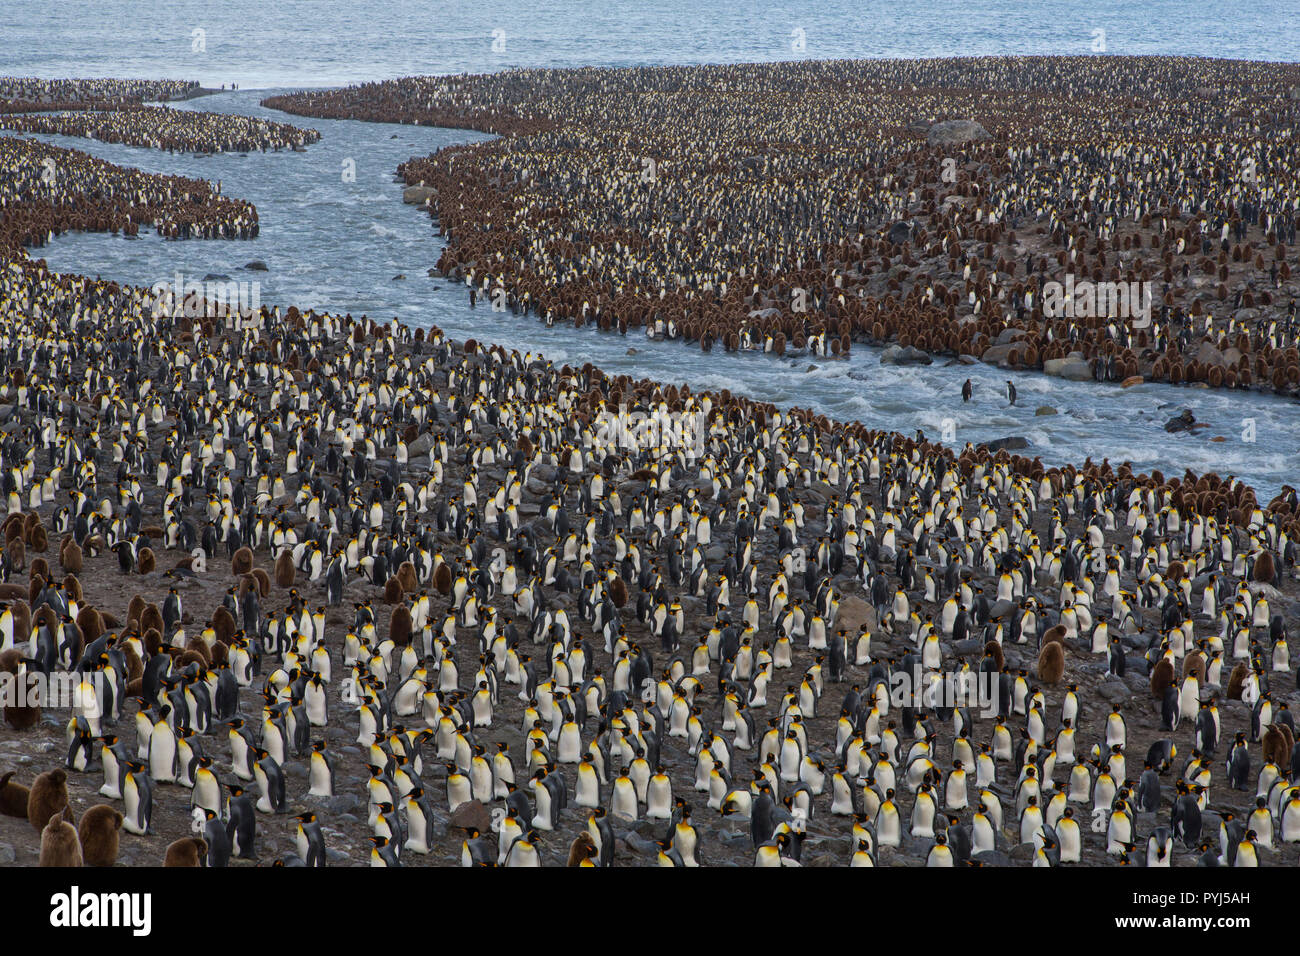 King penguins, St Andrews Bay, South Georgia, Antarctica. Stock Photo